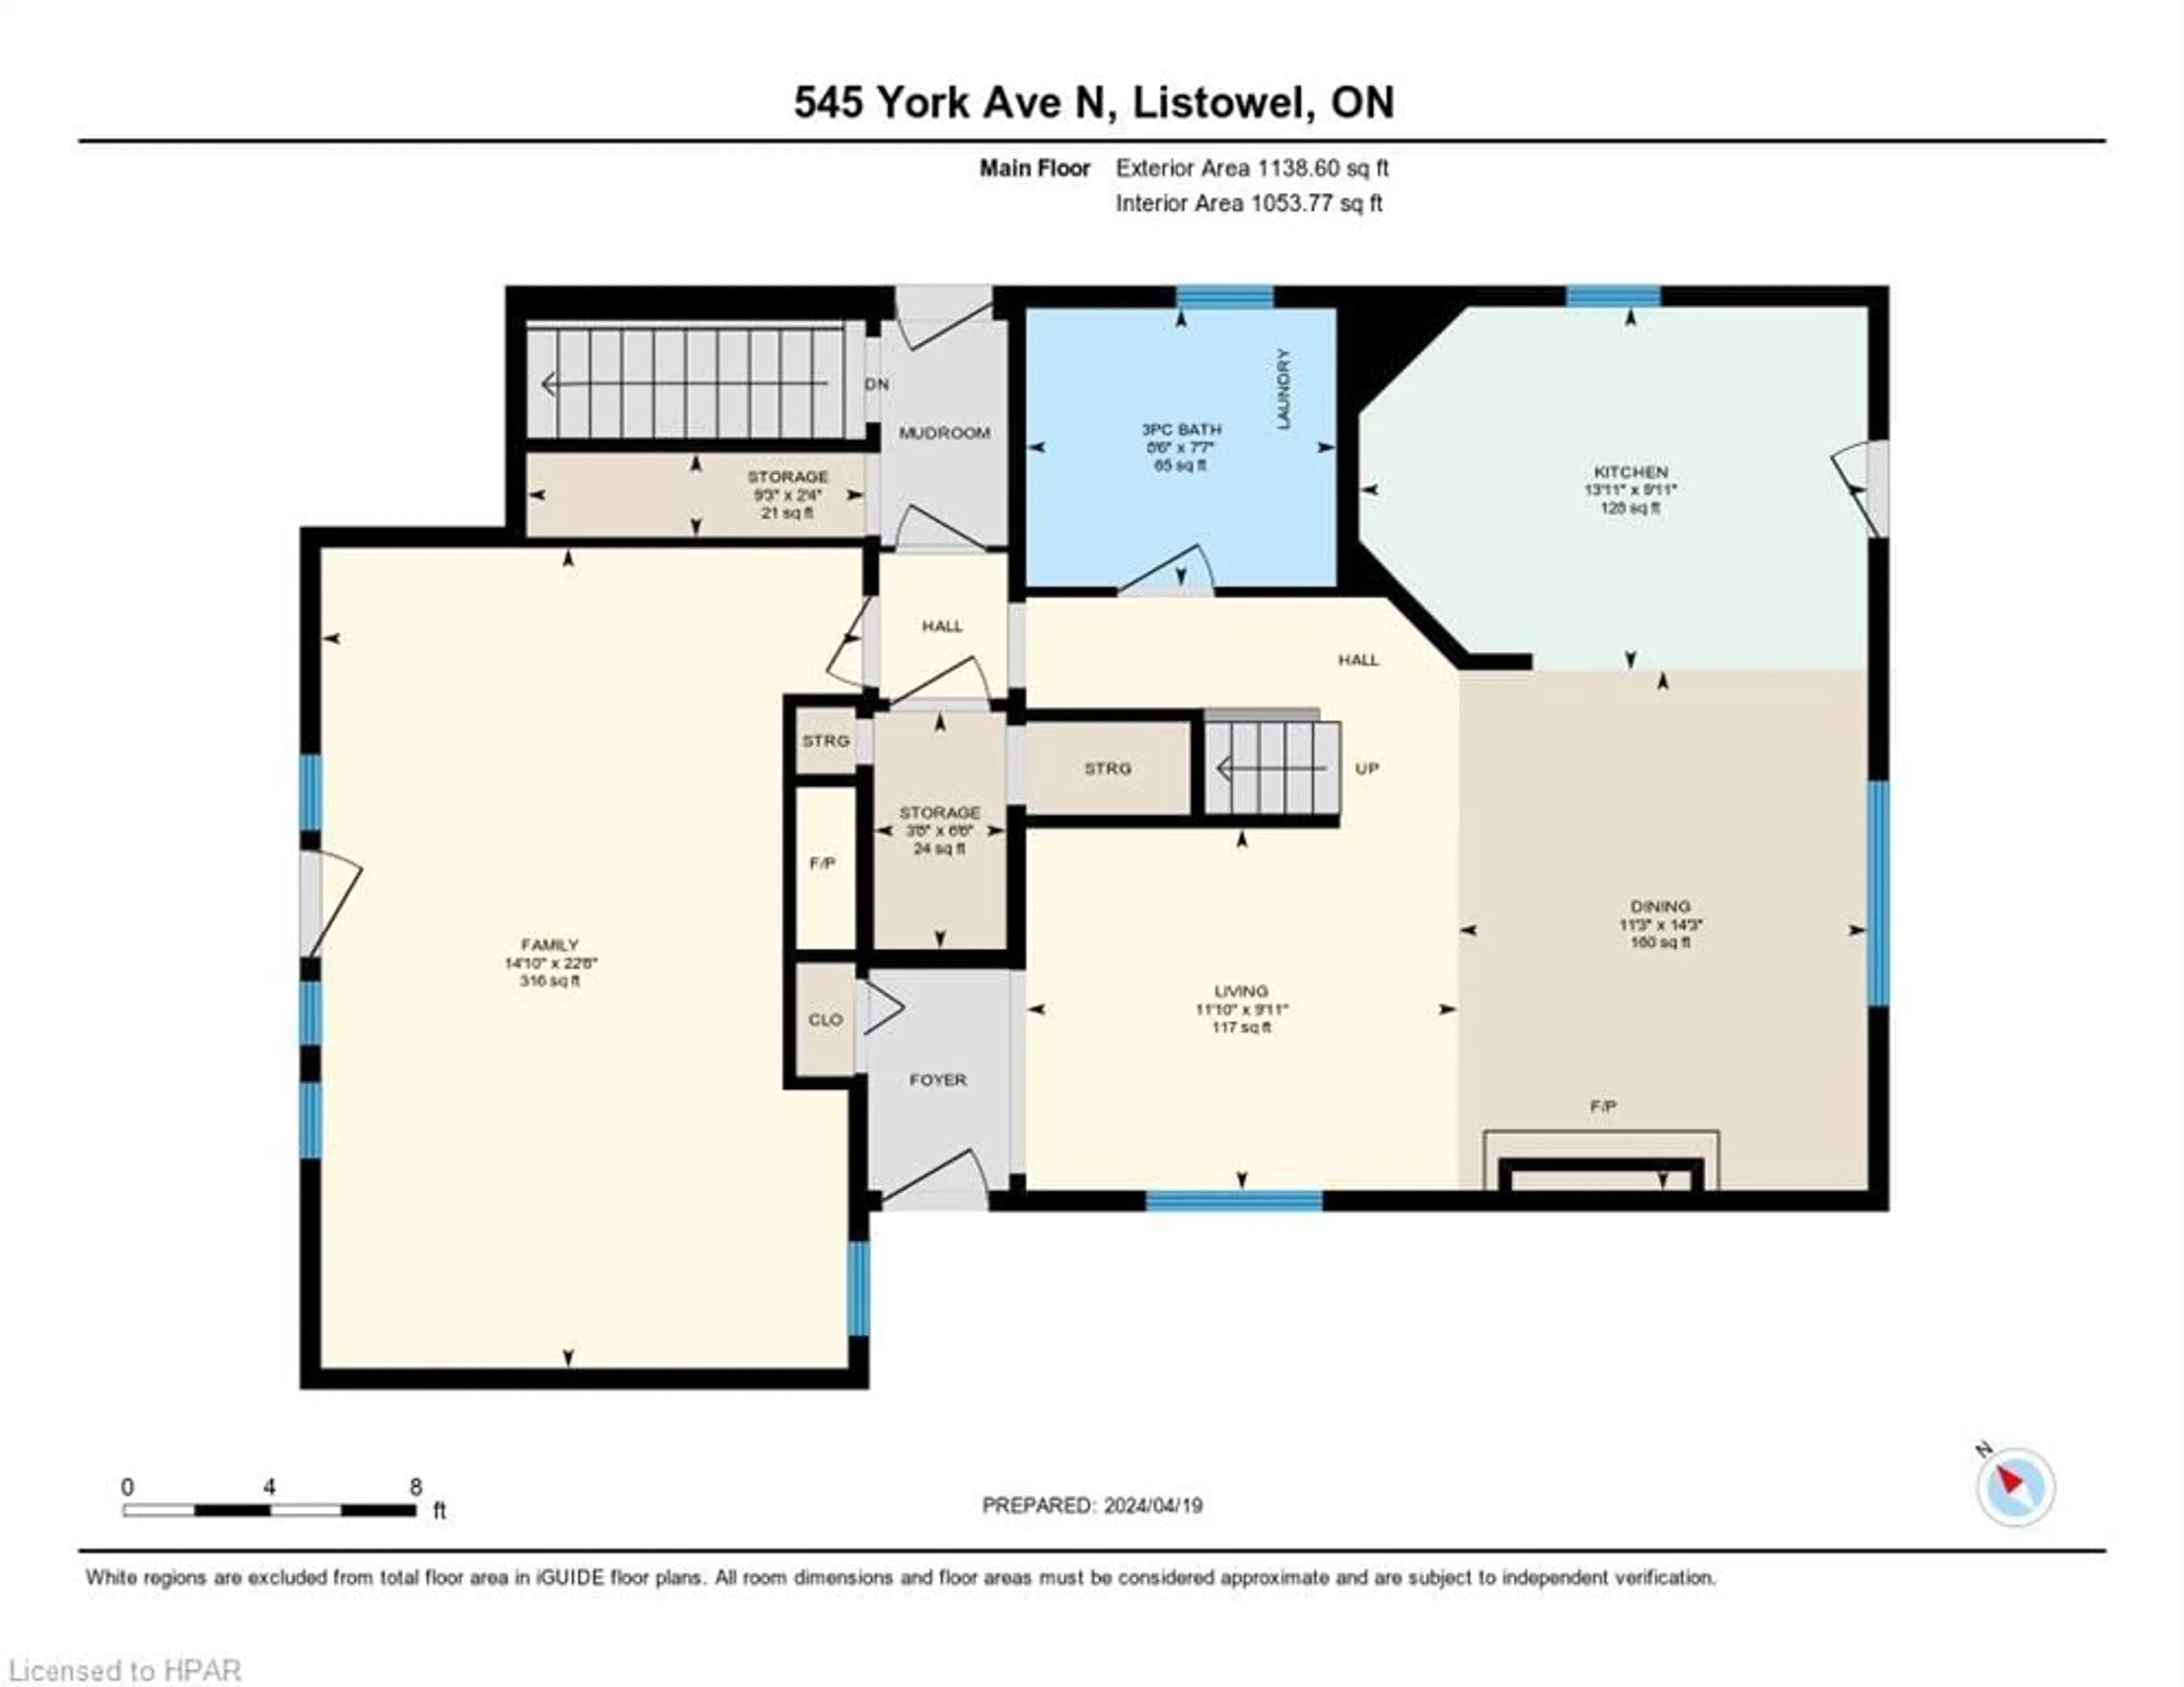 Floor plan for 545 York Ave, Listowel Ontario N4W 2X8